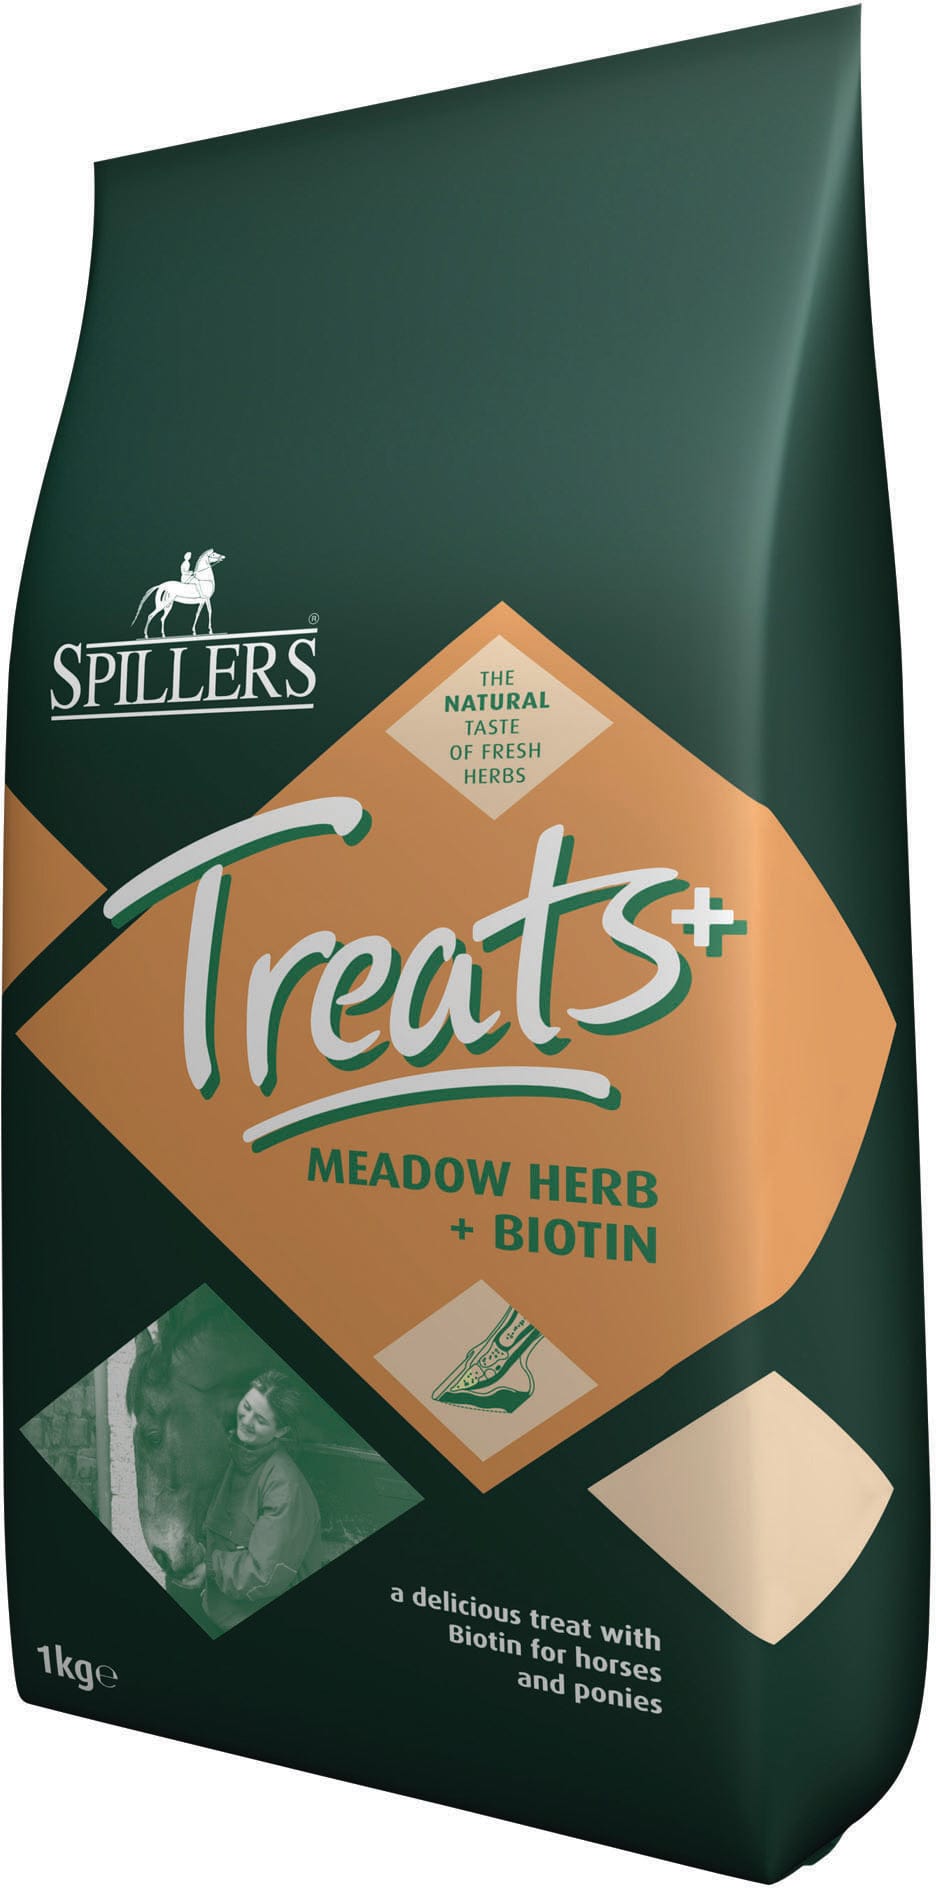 Spillers treats meadow herb & biotin